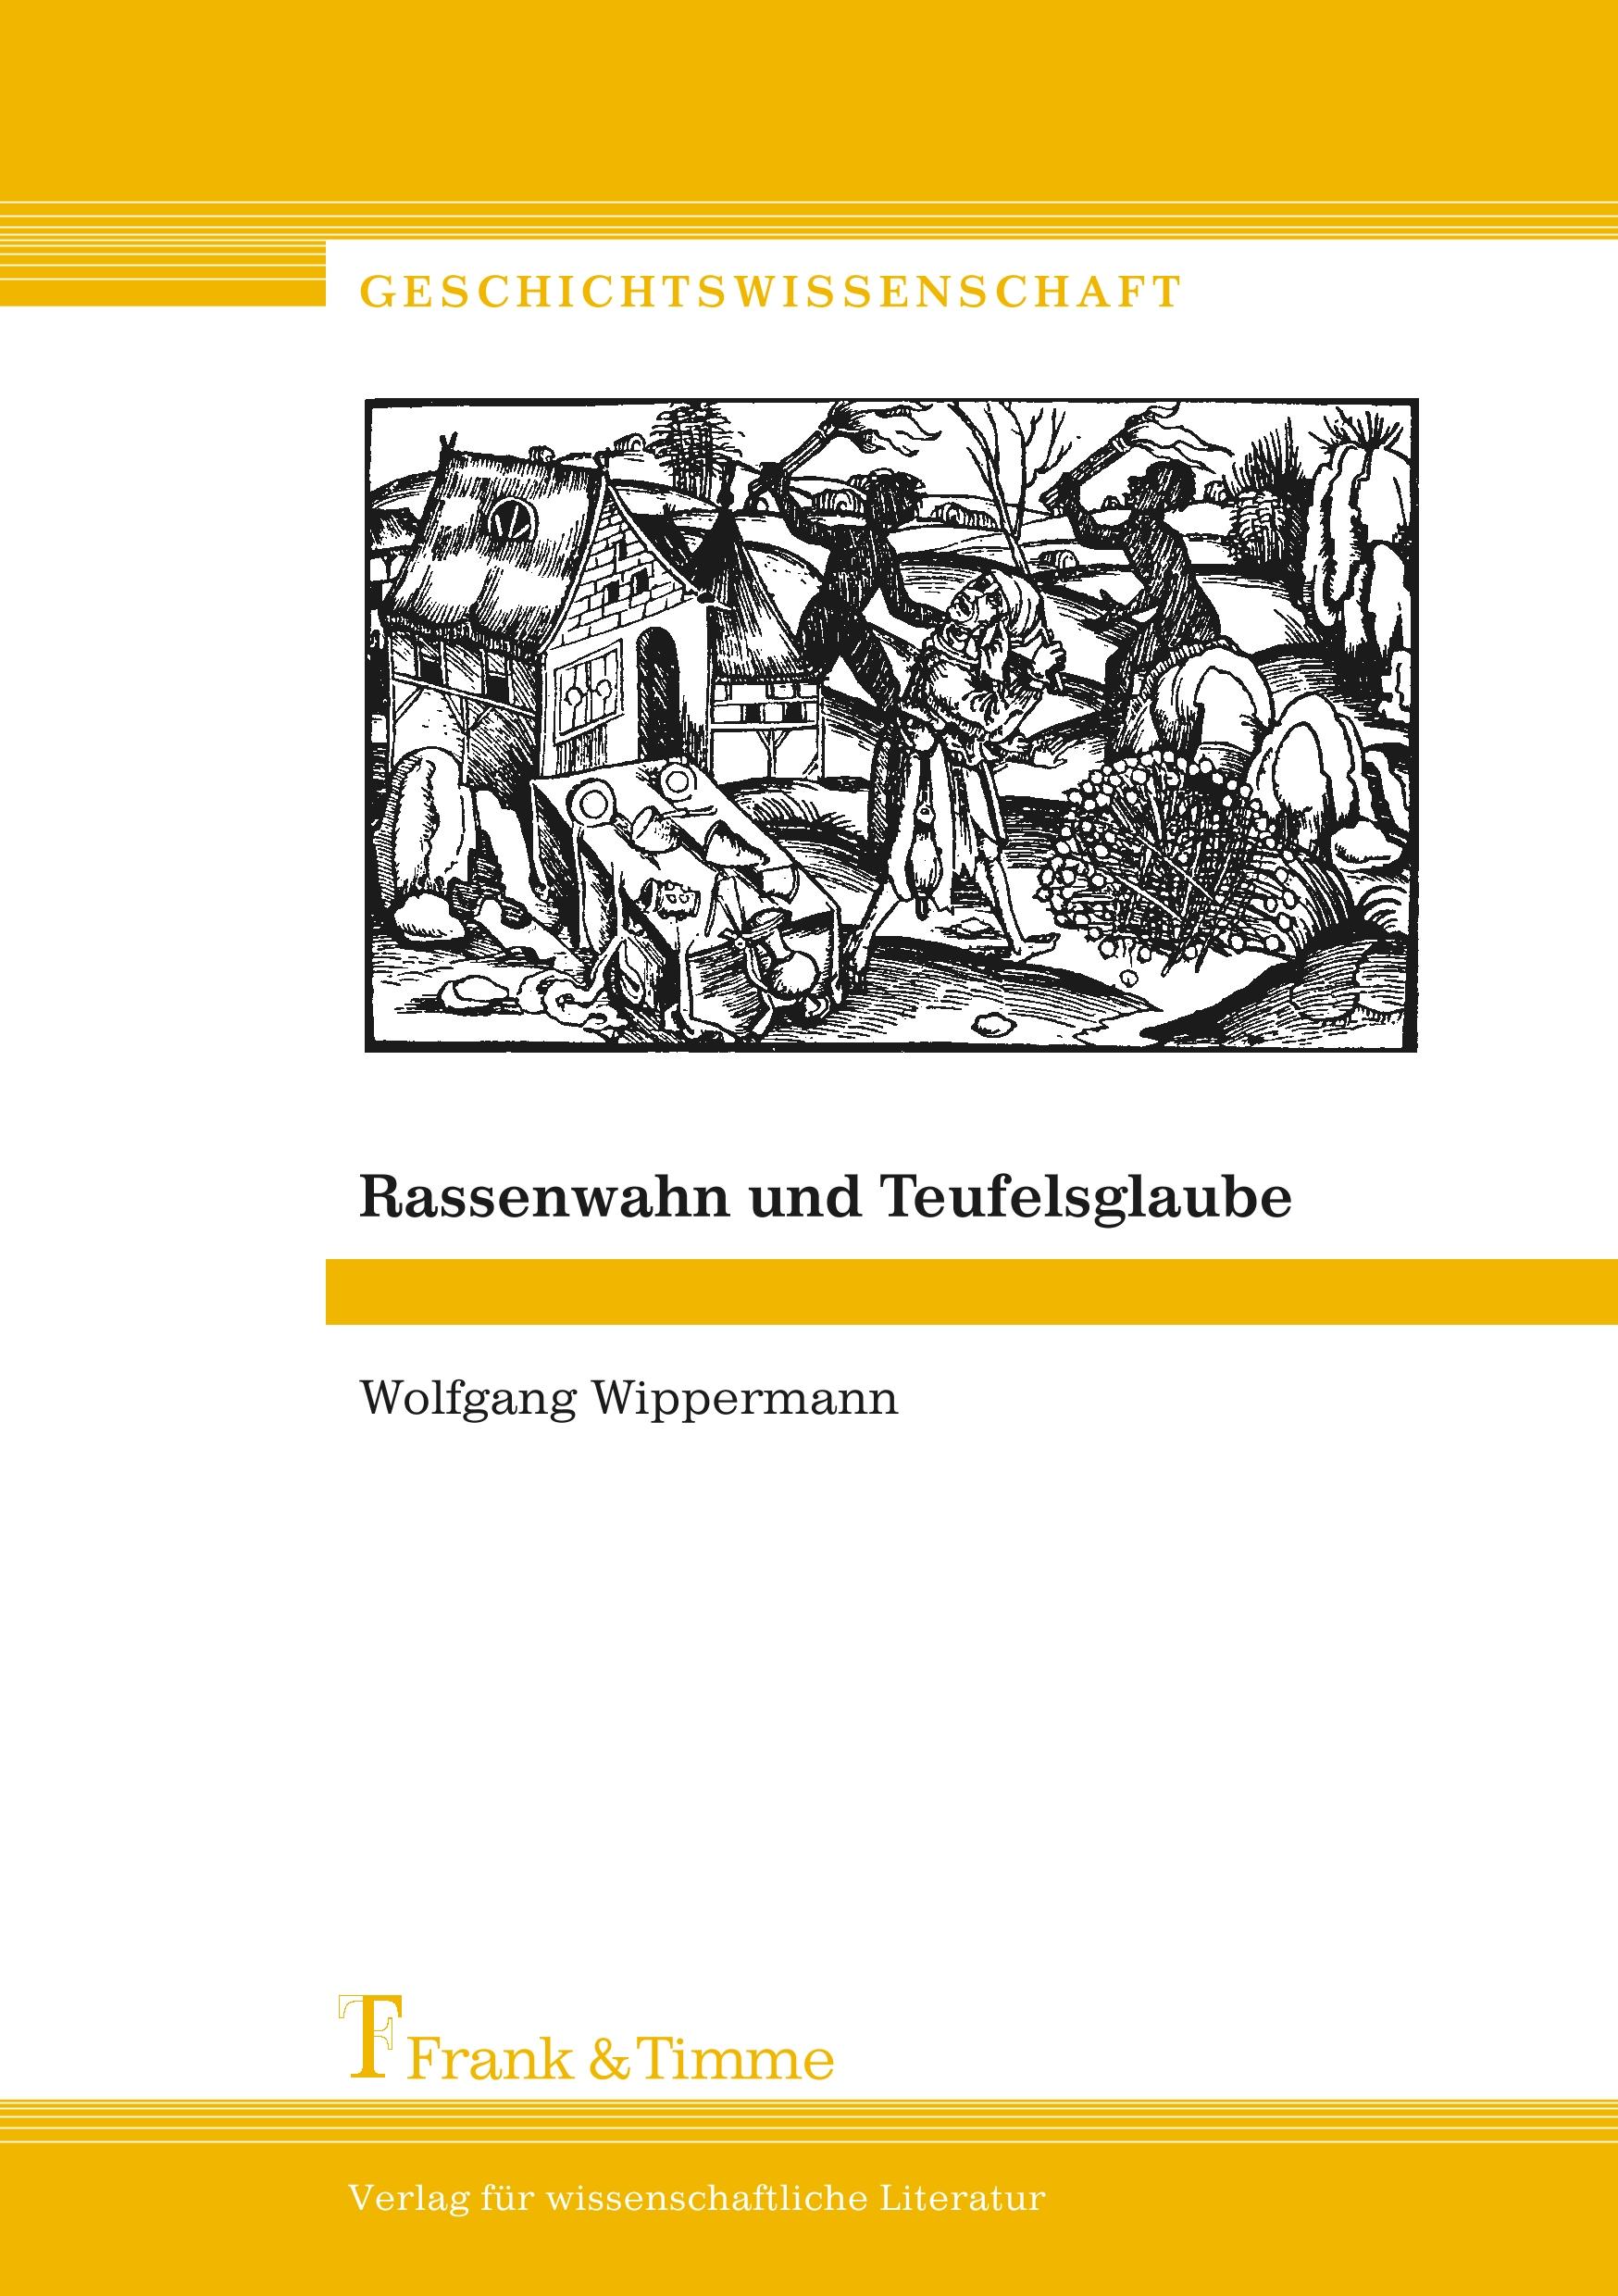 Rassenwahn und Teufelsglaube | Wolfgang Wippermann | Taschenbuch | Geschichtswissenschaft, Bd. 3 | Paperback | 156 S. | Deutsch | 2005 | Frank & Timme | EAN 9783865960078 - Wippermann, Wolfgang